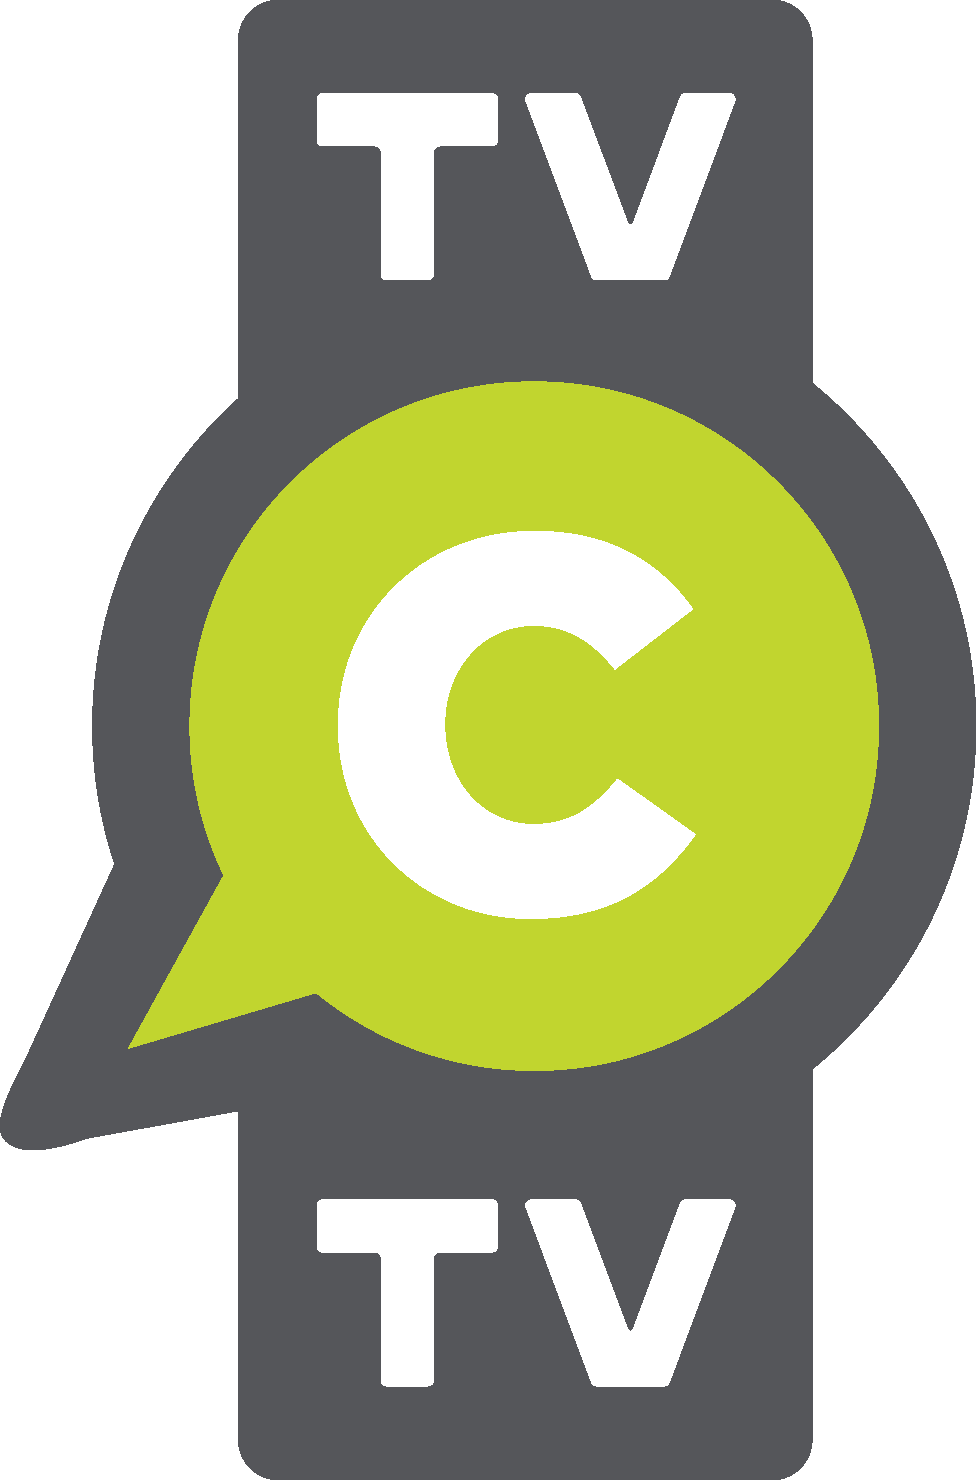 Tvctv community media. Moving clipart james bond